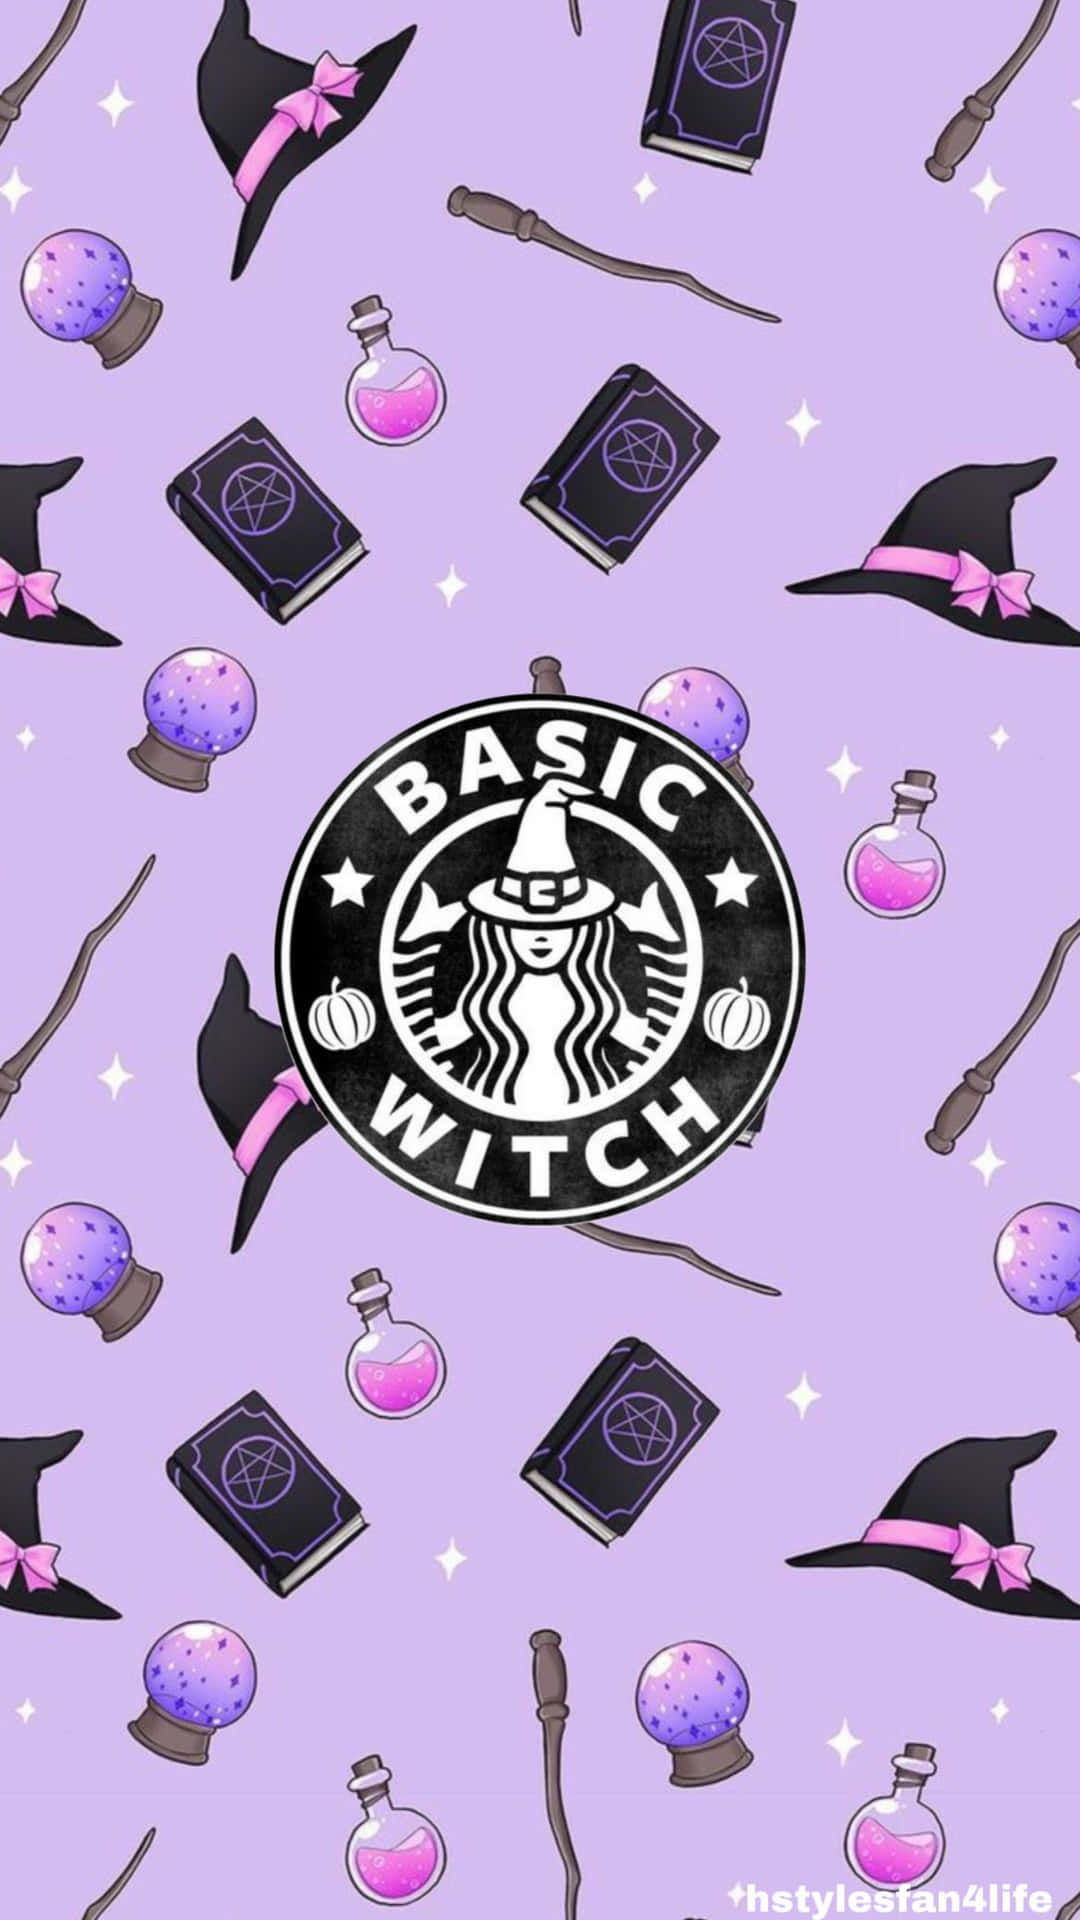 Basic Witch Starbucks Parody Wallpaper